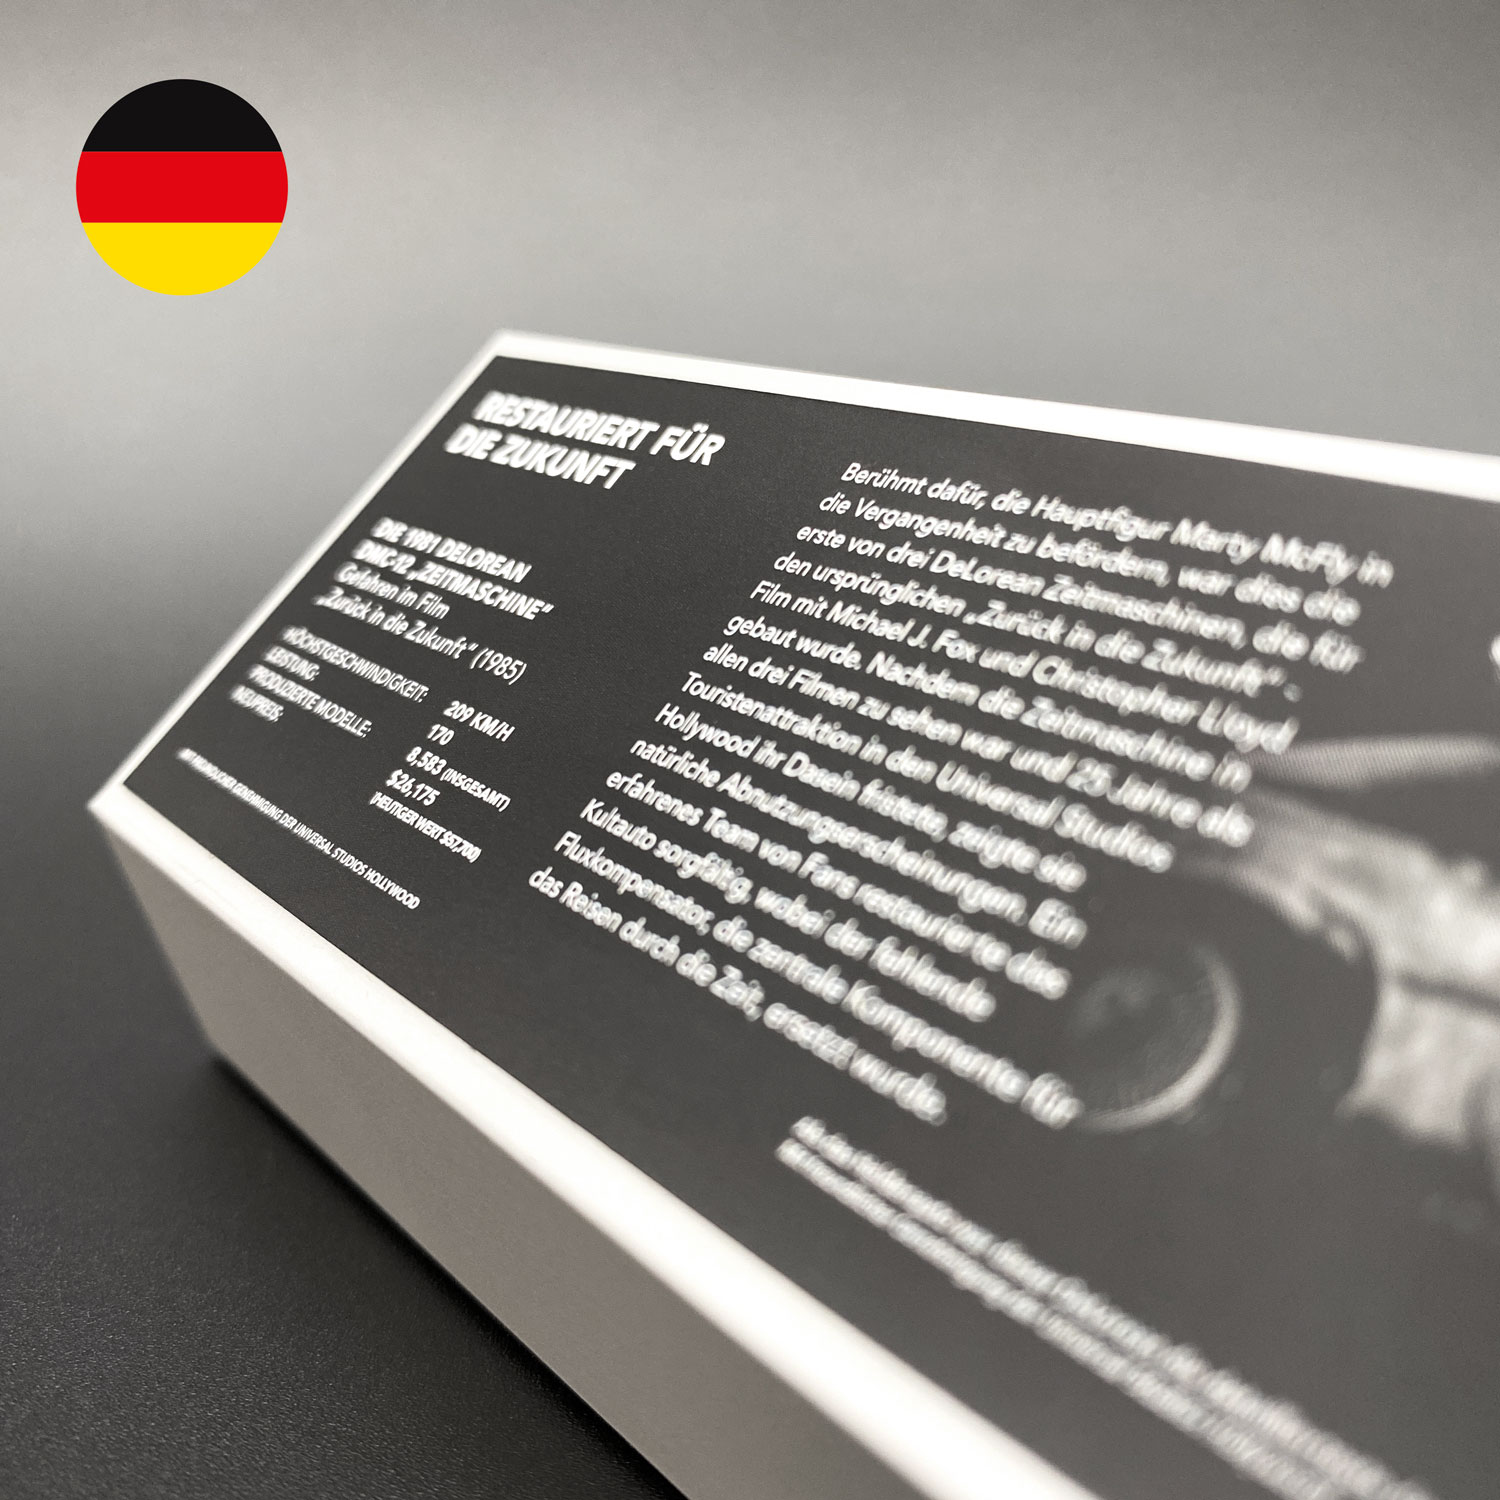 German version of model DeLorean Exhibition Display Stand